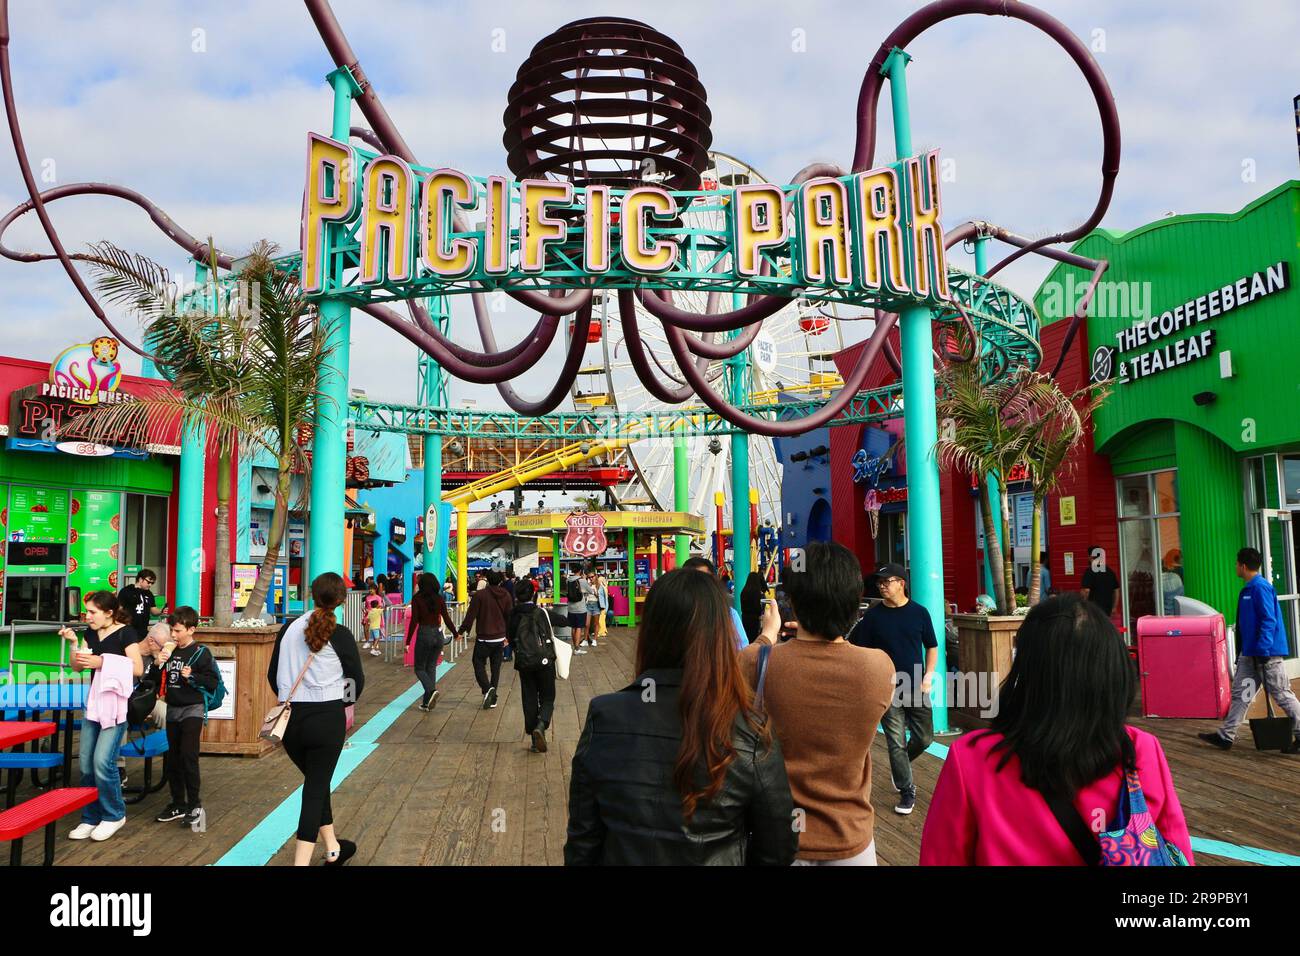 Octopus and sign for Pacific Park funfair Santa Monica Pier California USA Stock Photo